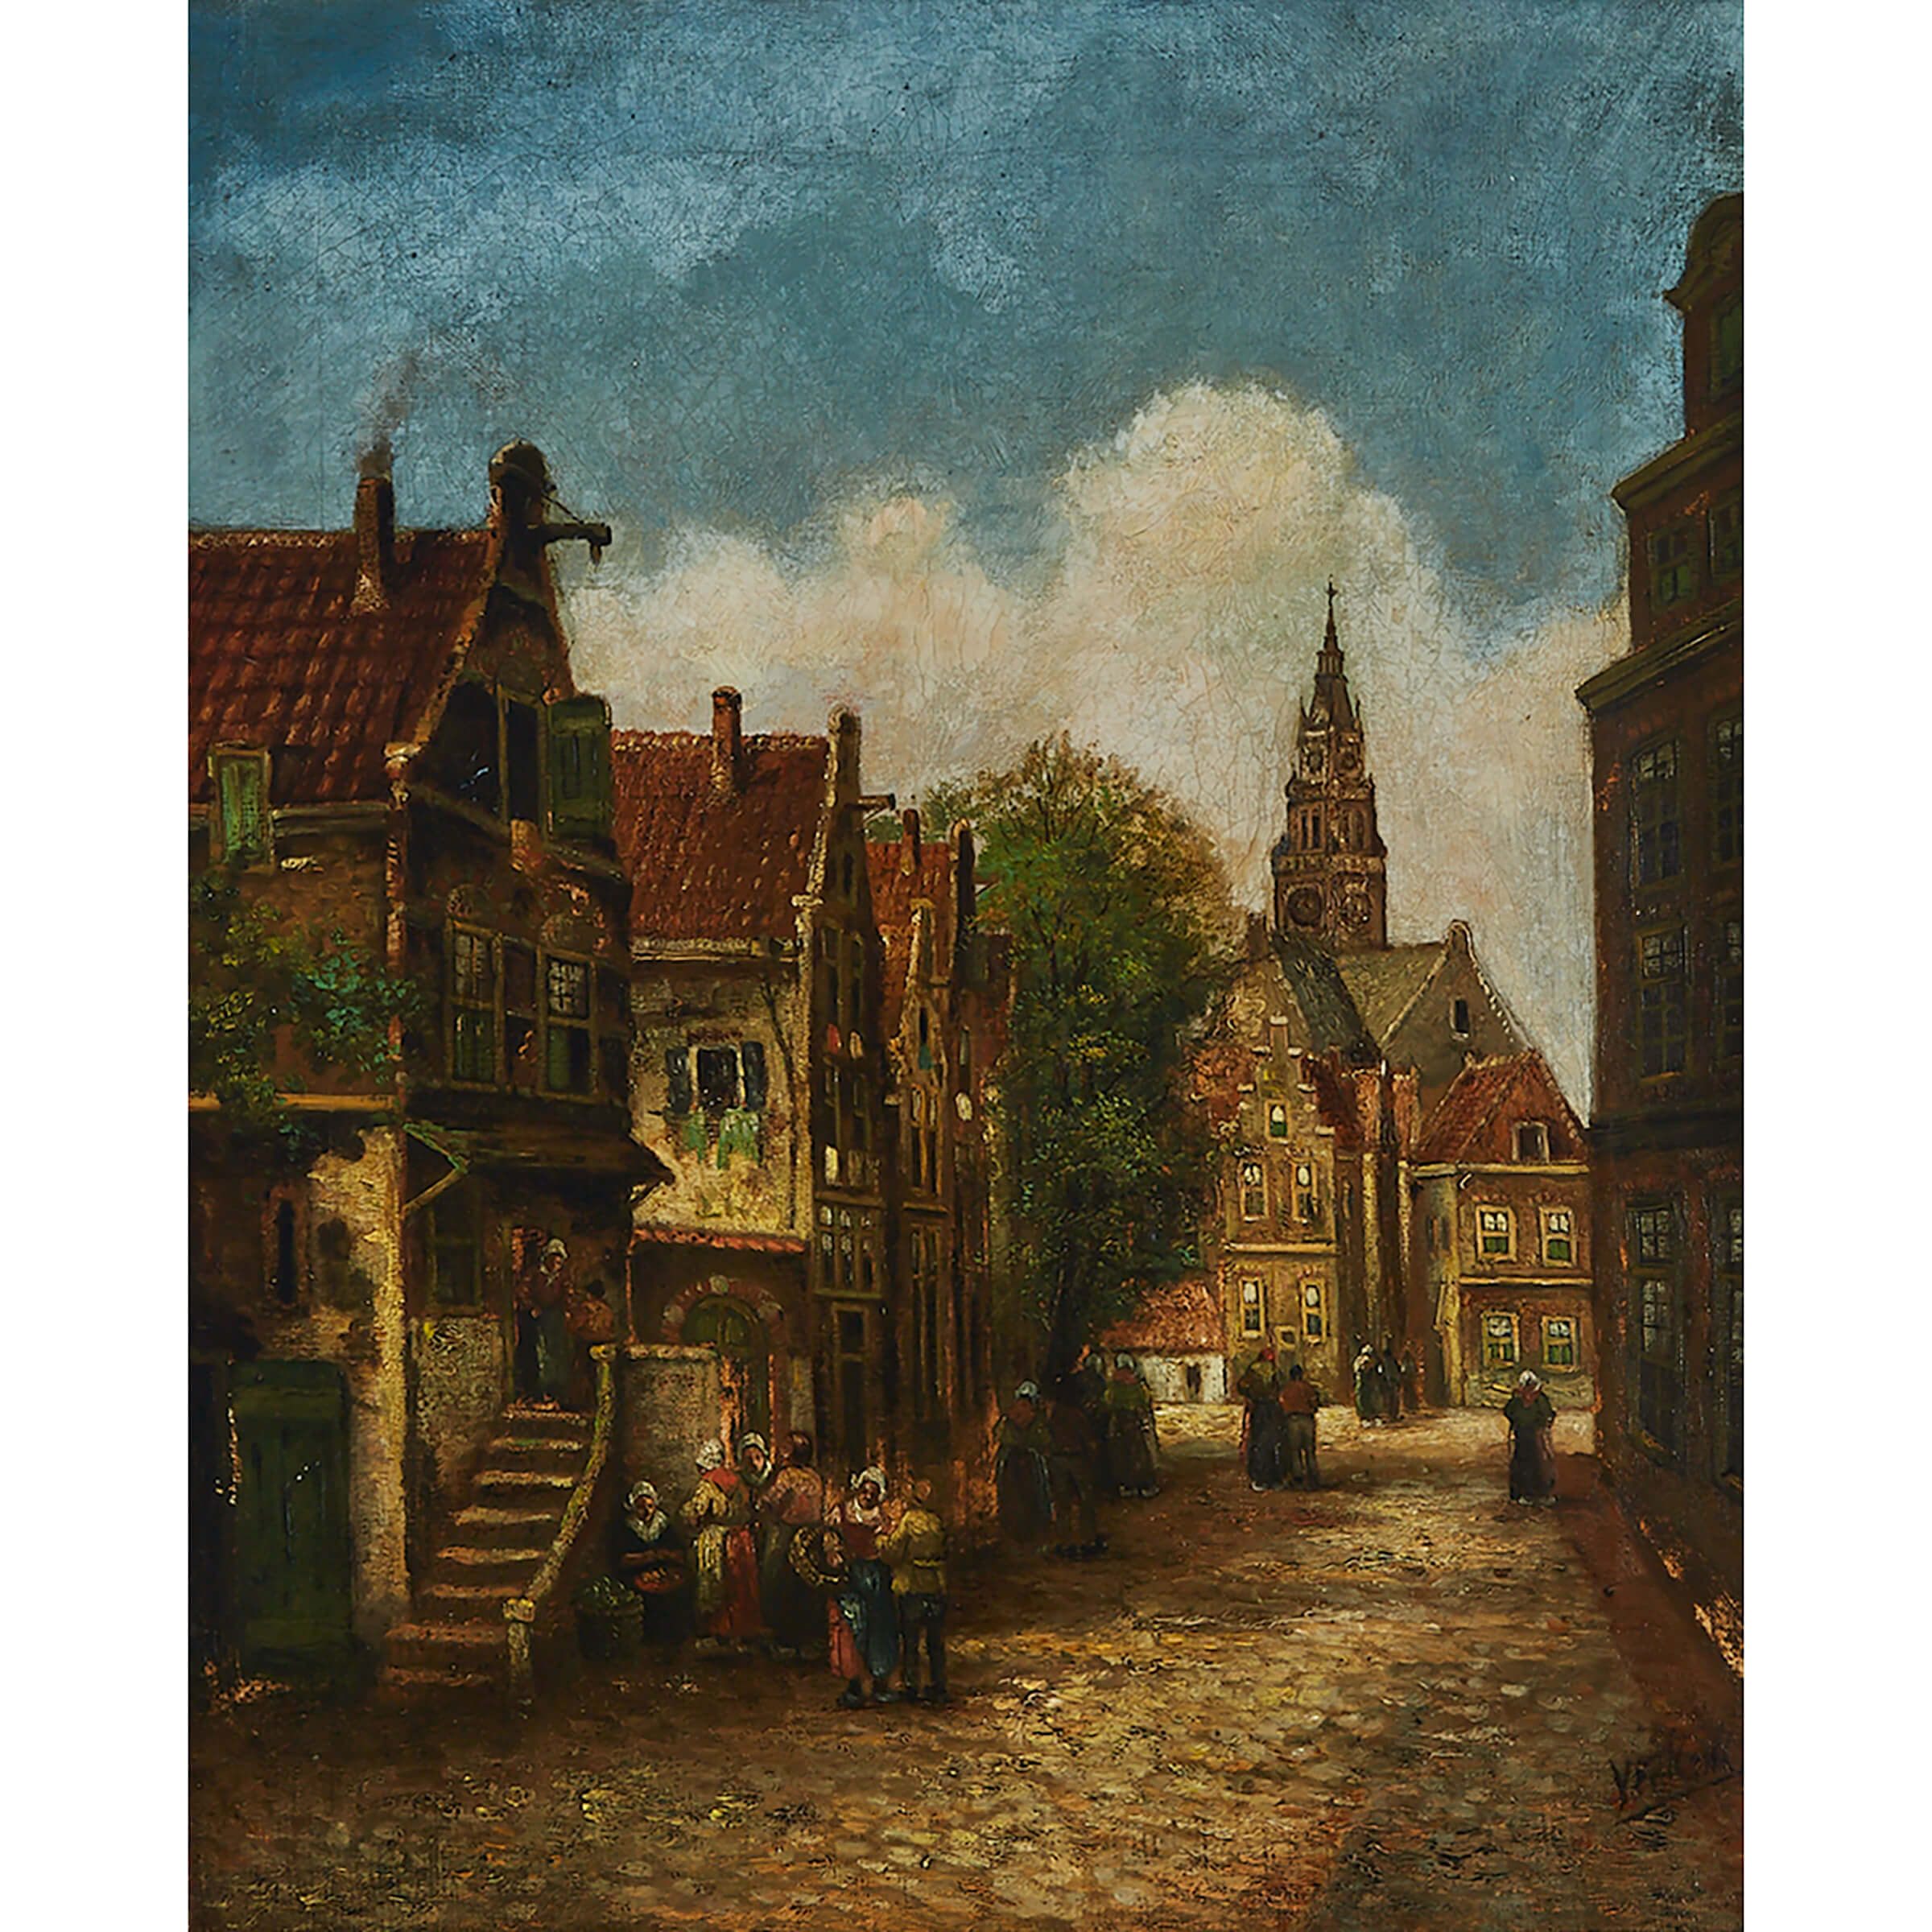 Attributed to Johan Verkerk (1900- ), Dutch